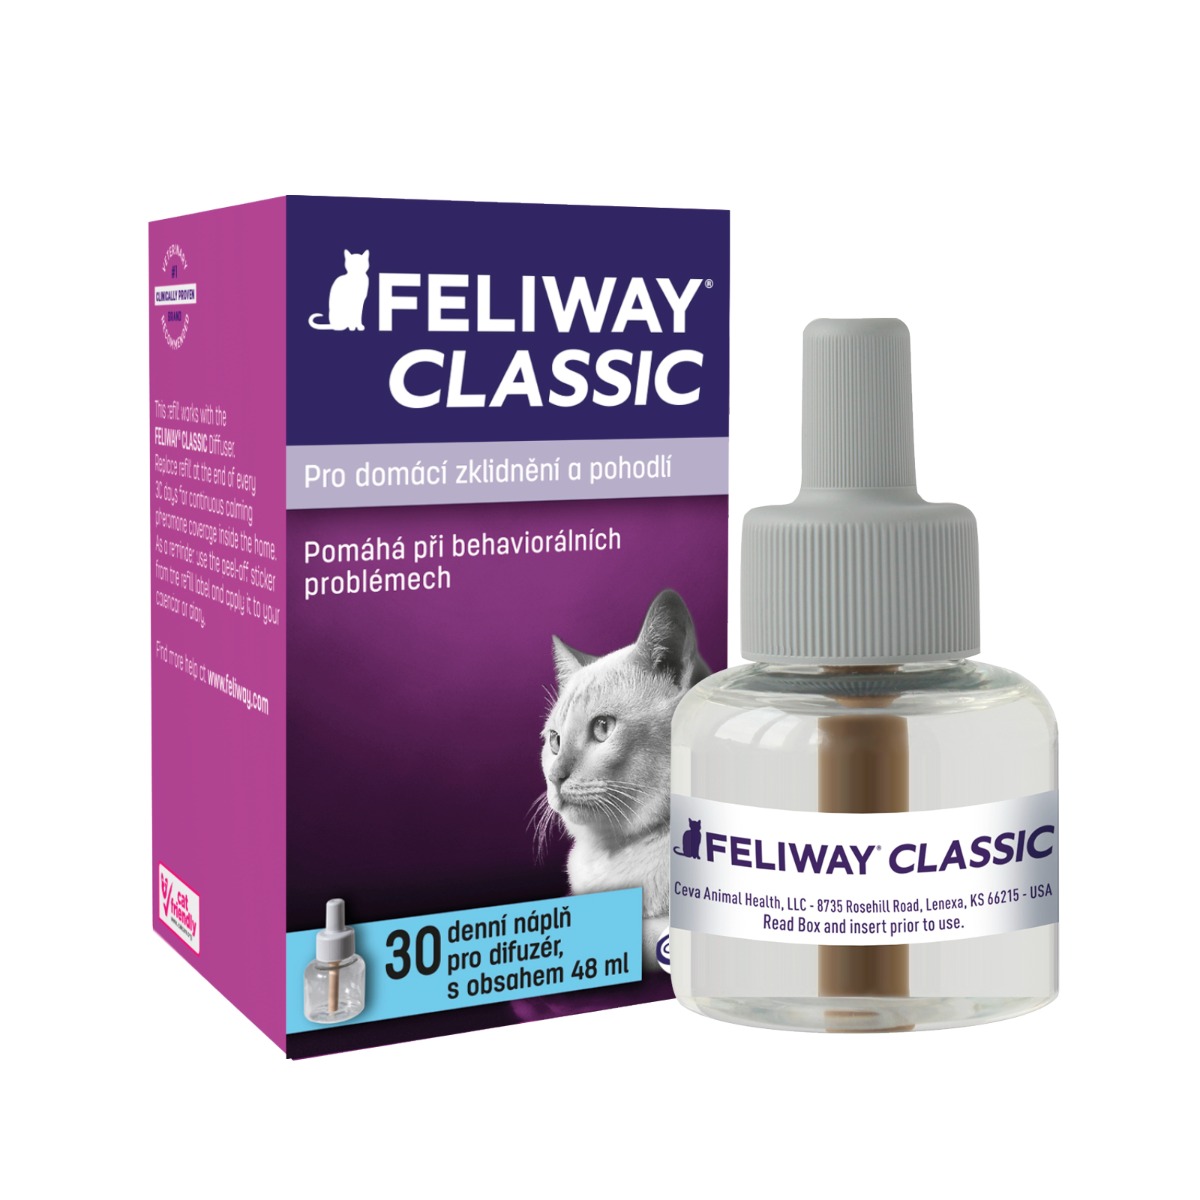 Feliway Classic náhradní náplň pro kočky 48 ml Feliway